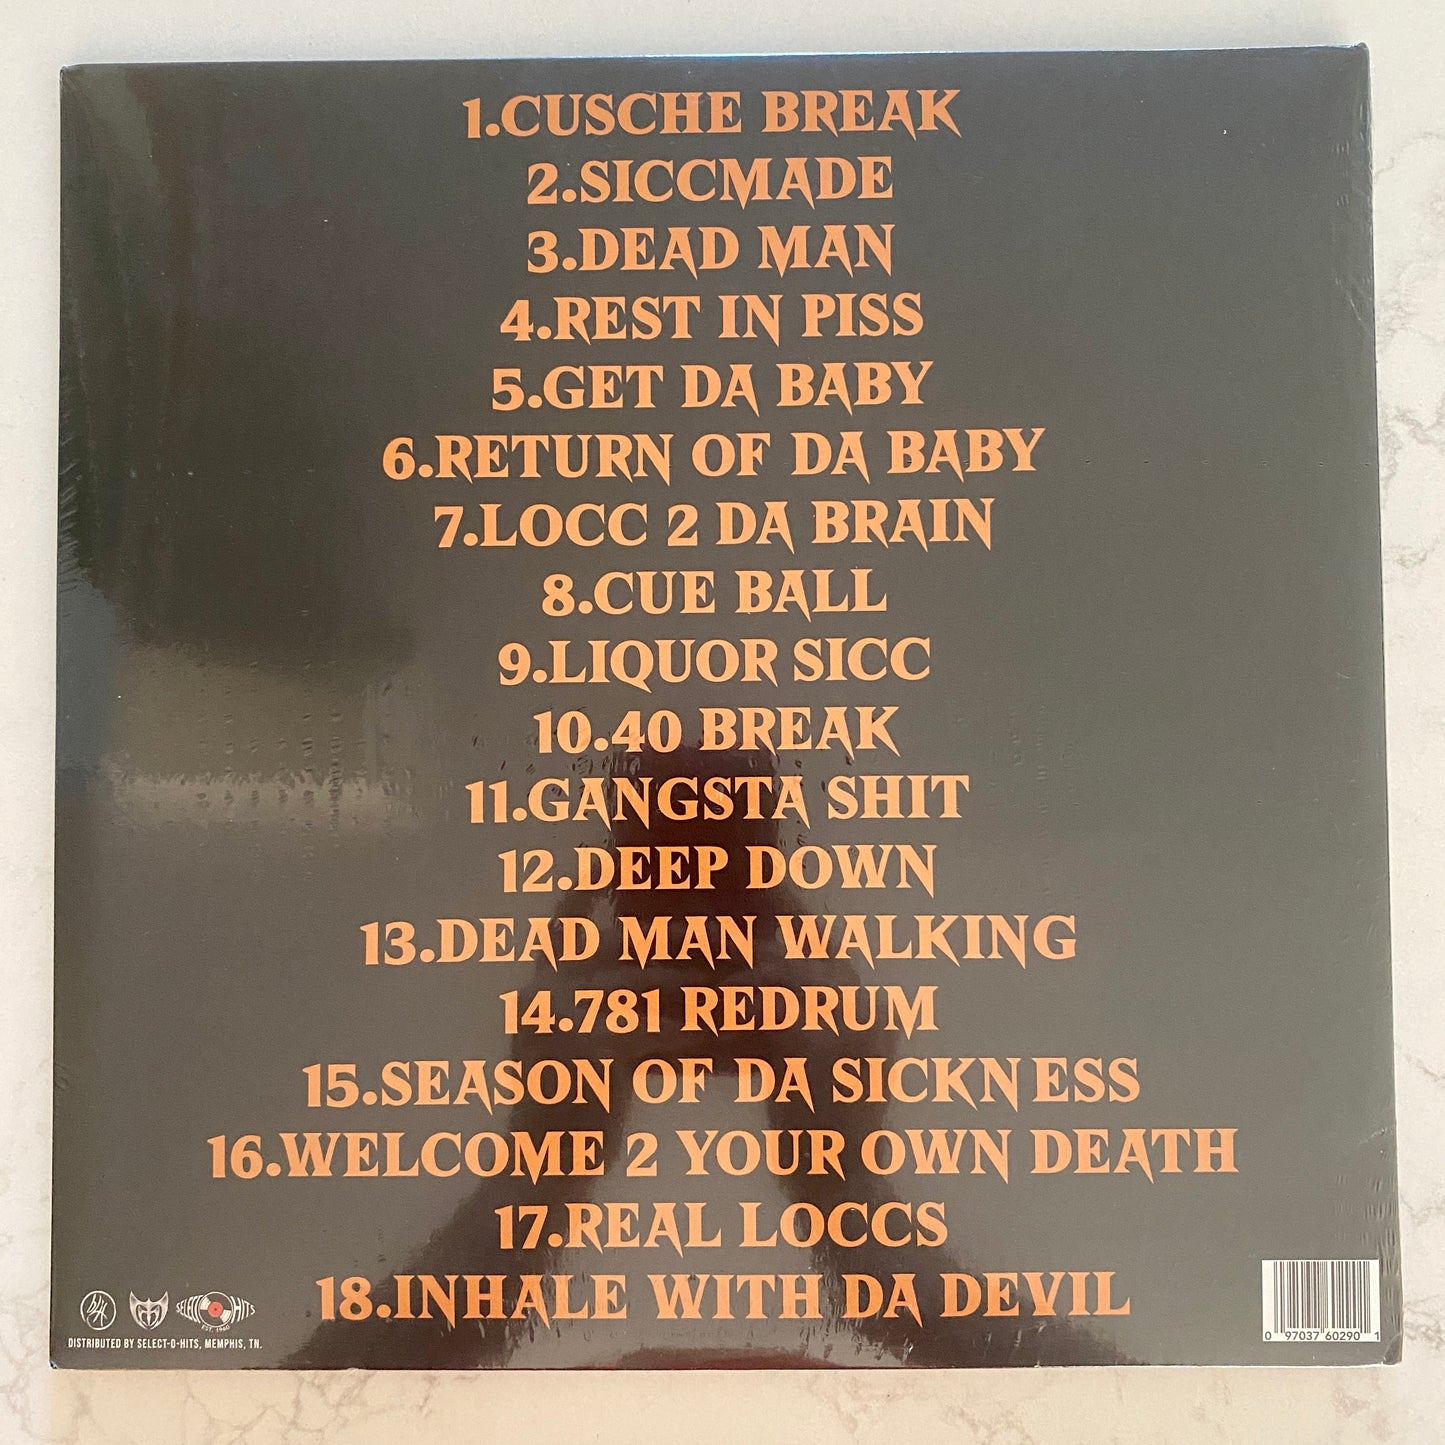 Brotha Lynch Hung - Season Of Da Siccness (The Resurrection) (LP, Ora + LP, Yel + Album, Ltd, RE). SEALED!! HIP-HOP